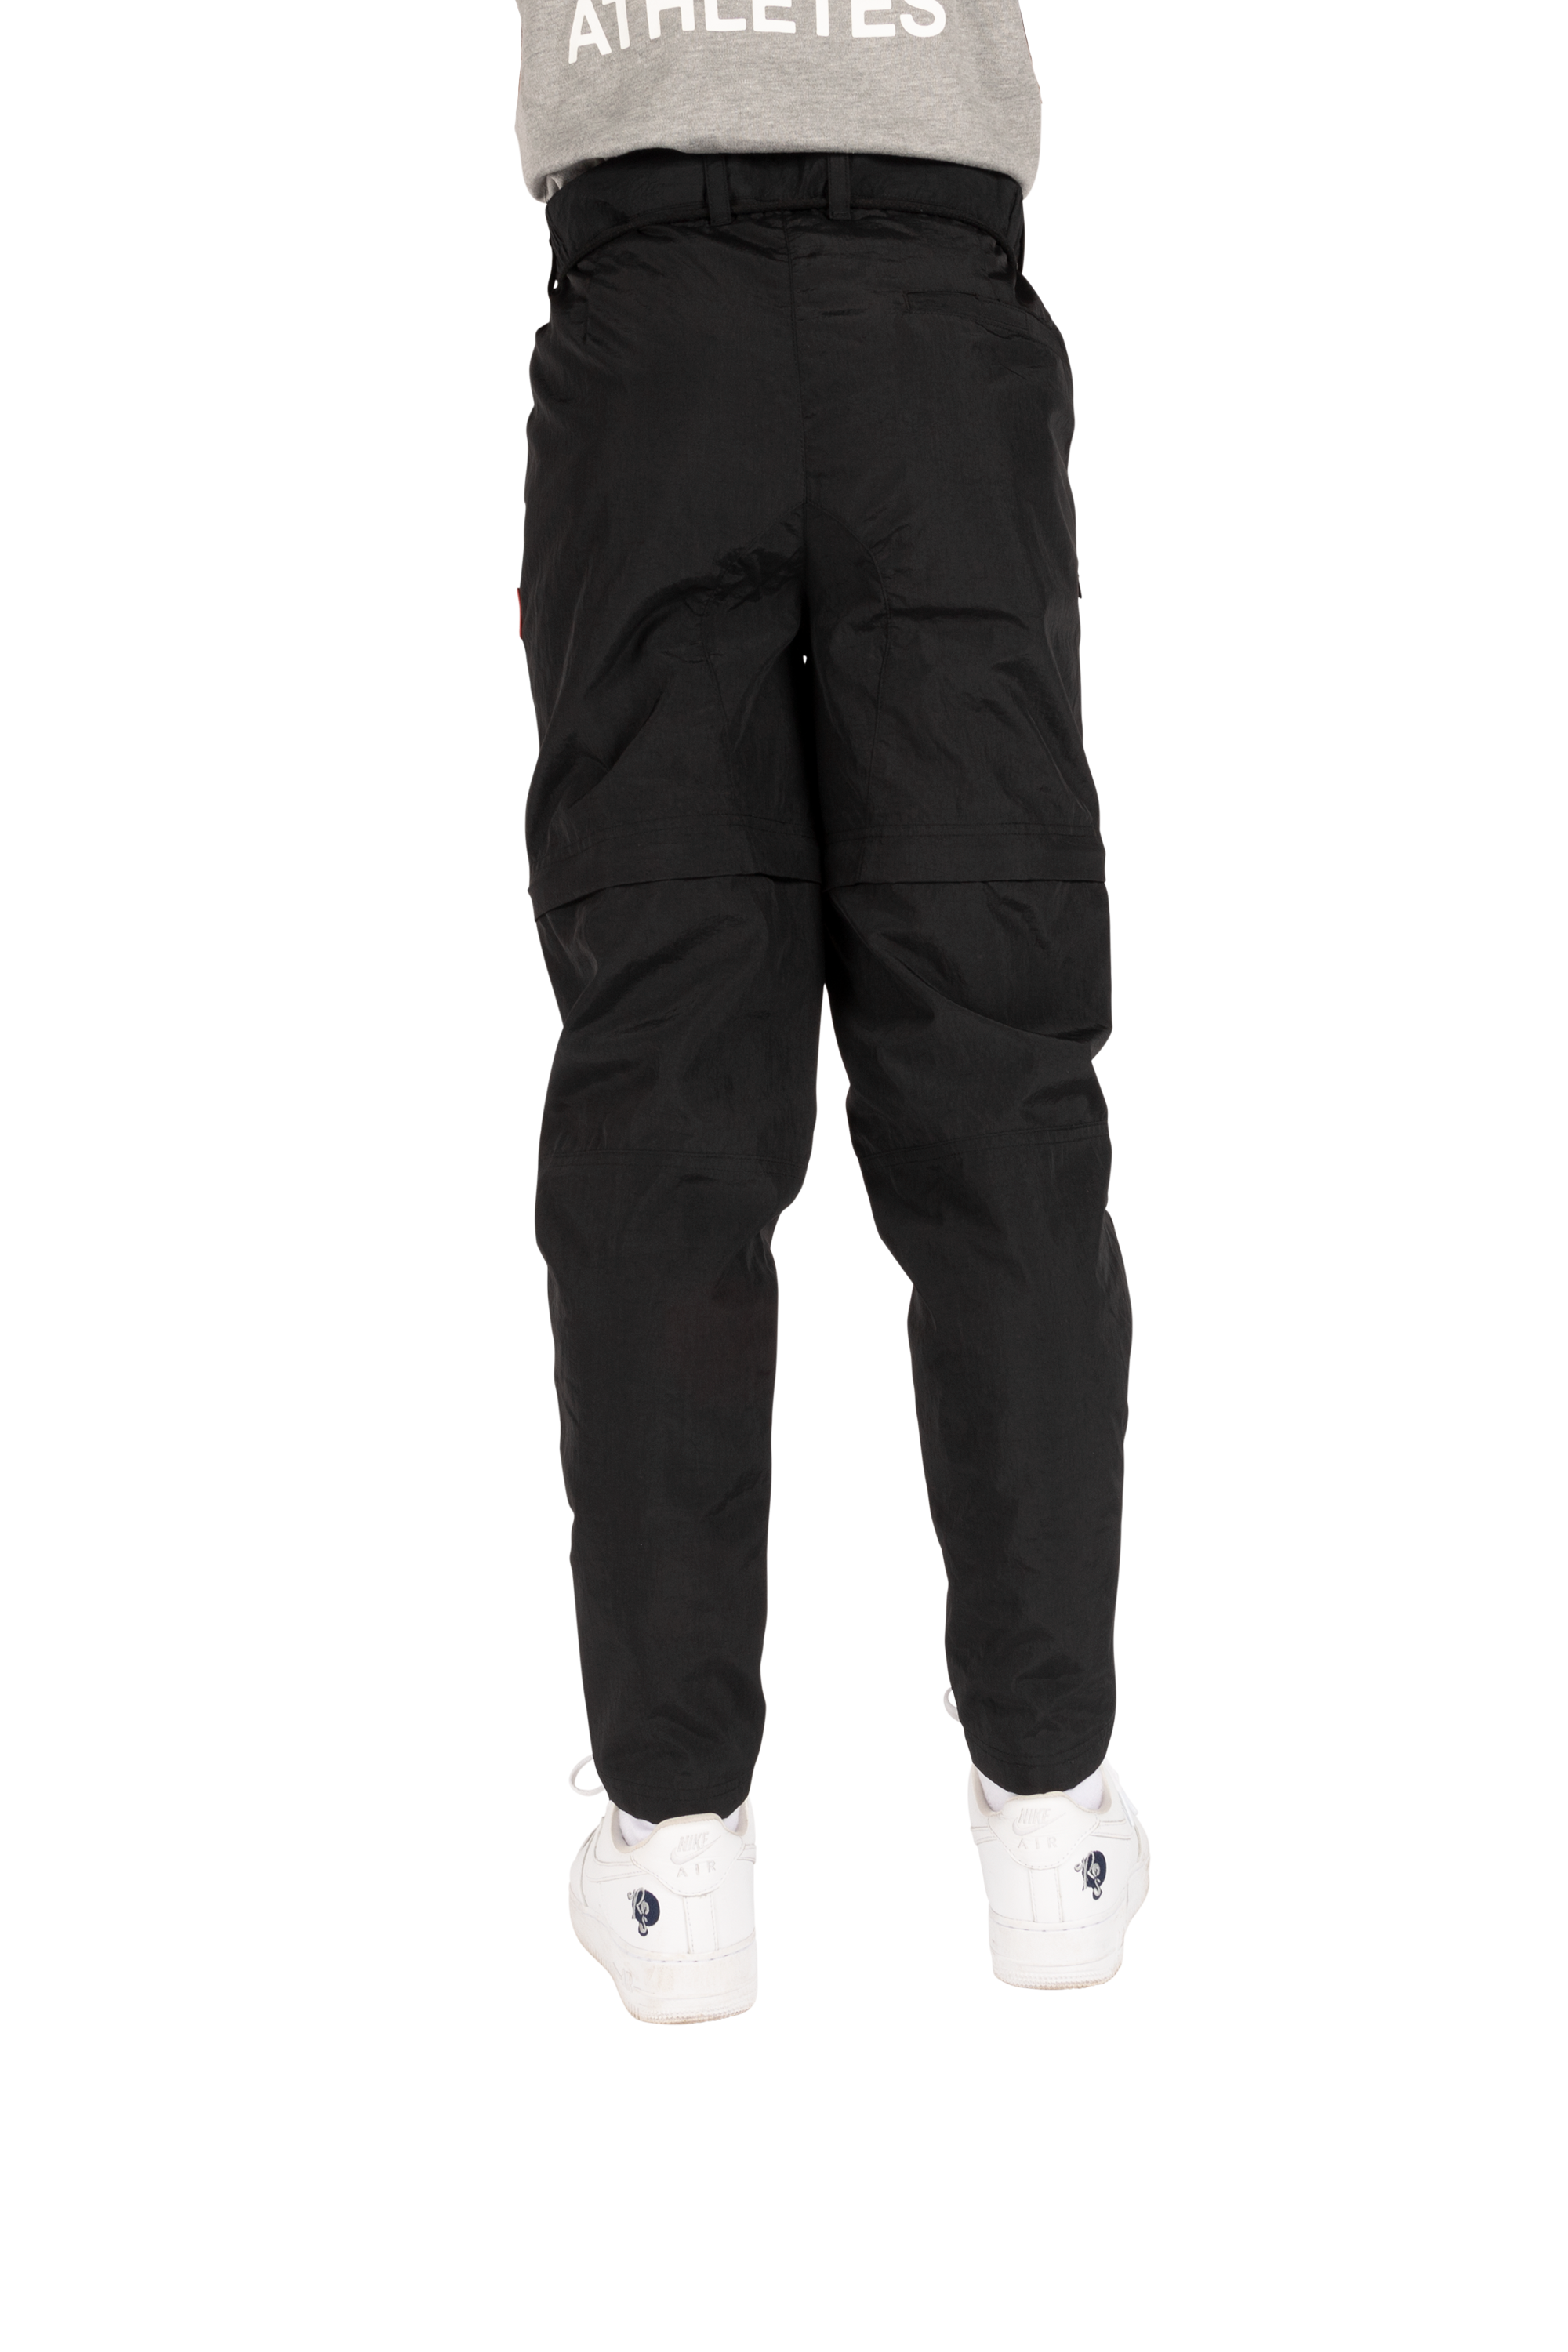 Parachute Nylon Trousers Black FW20 – THE NEW ORIGINALS